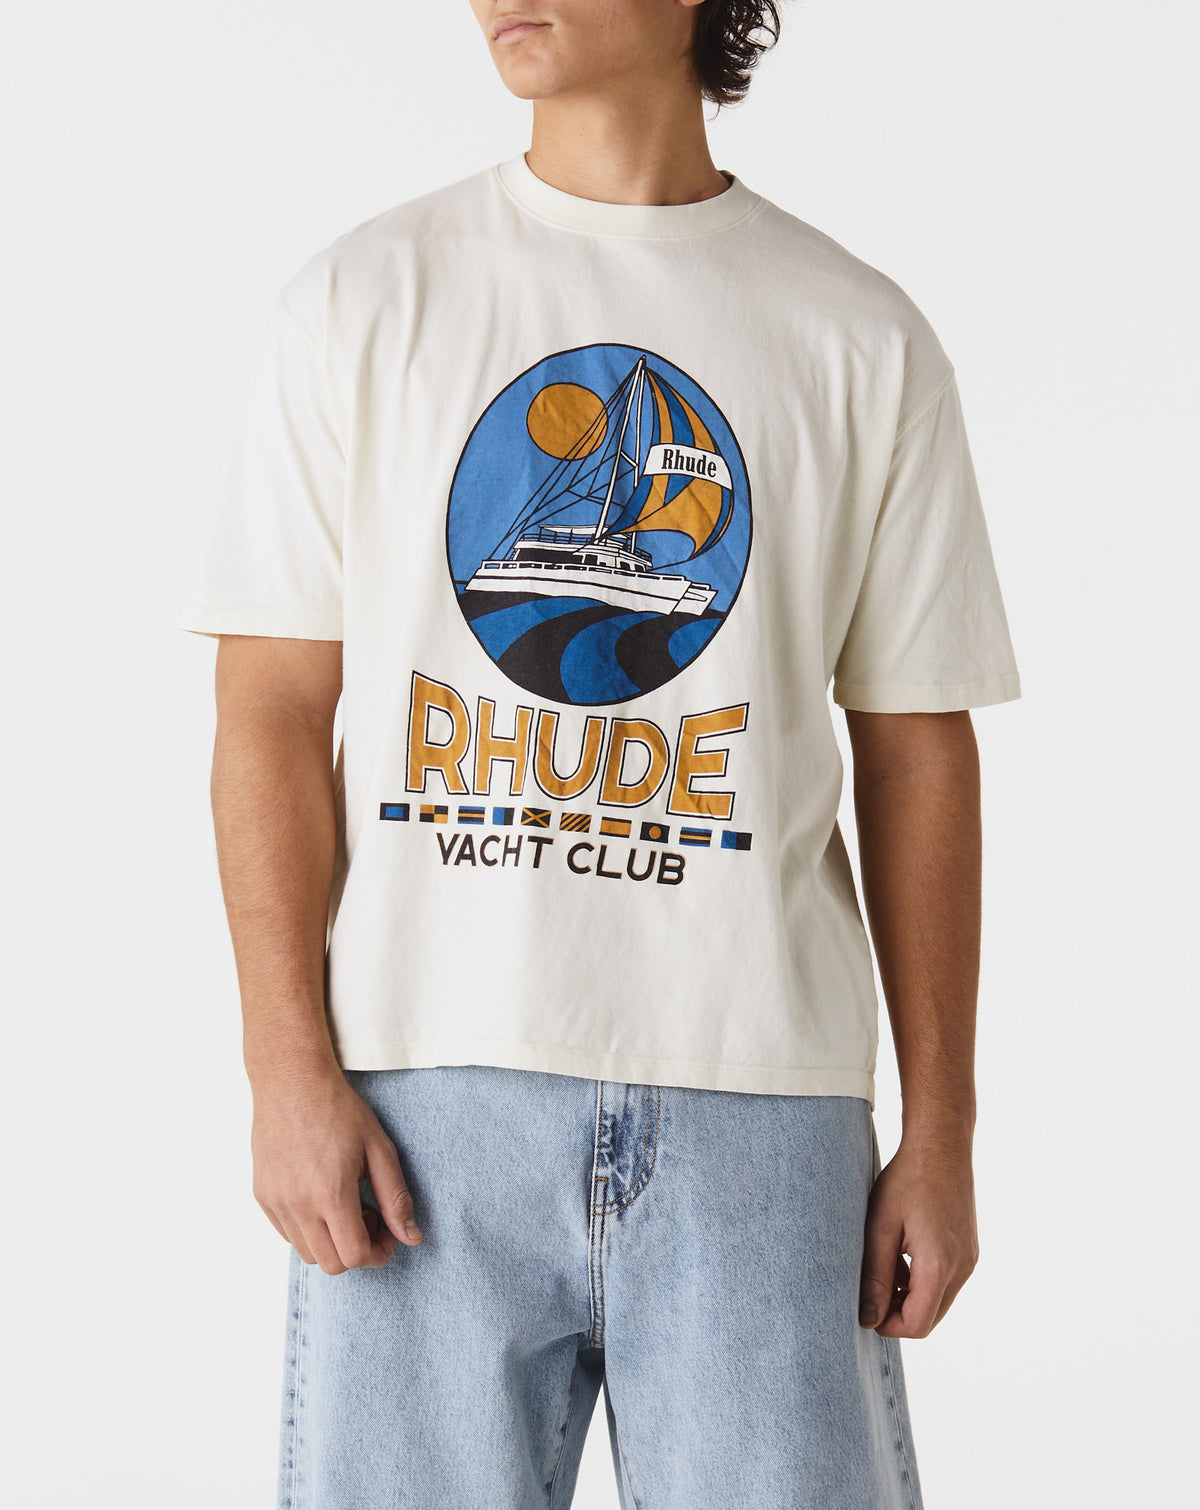 Rhude Yacht Club T-Shirt - Rule of Next Apparel